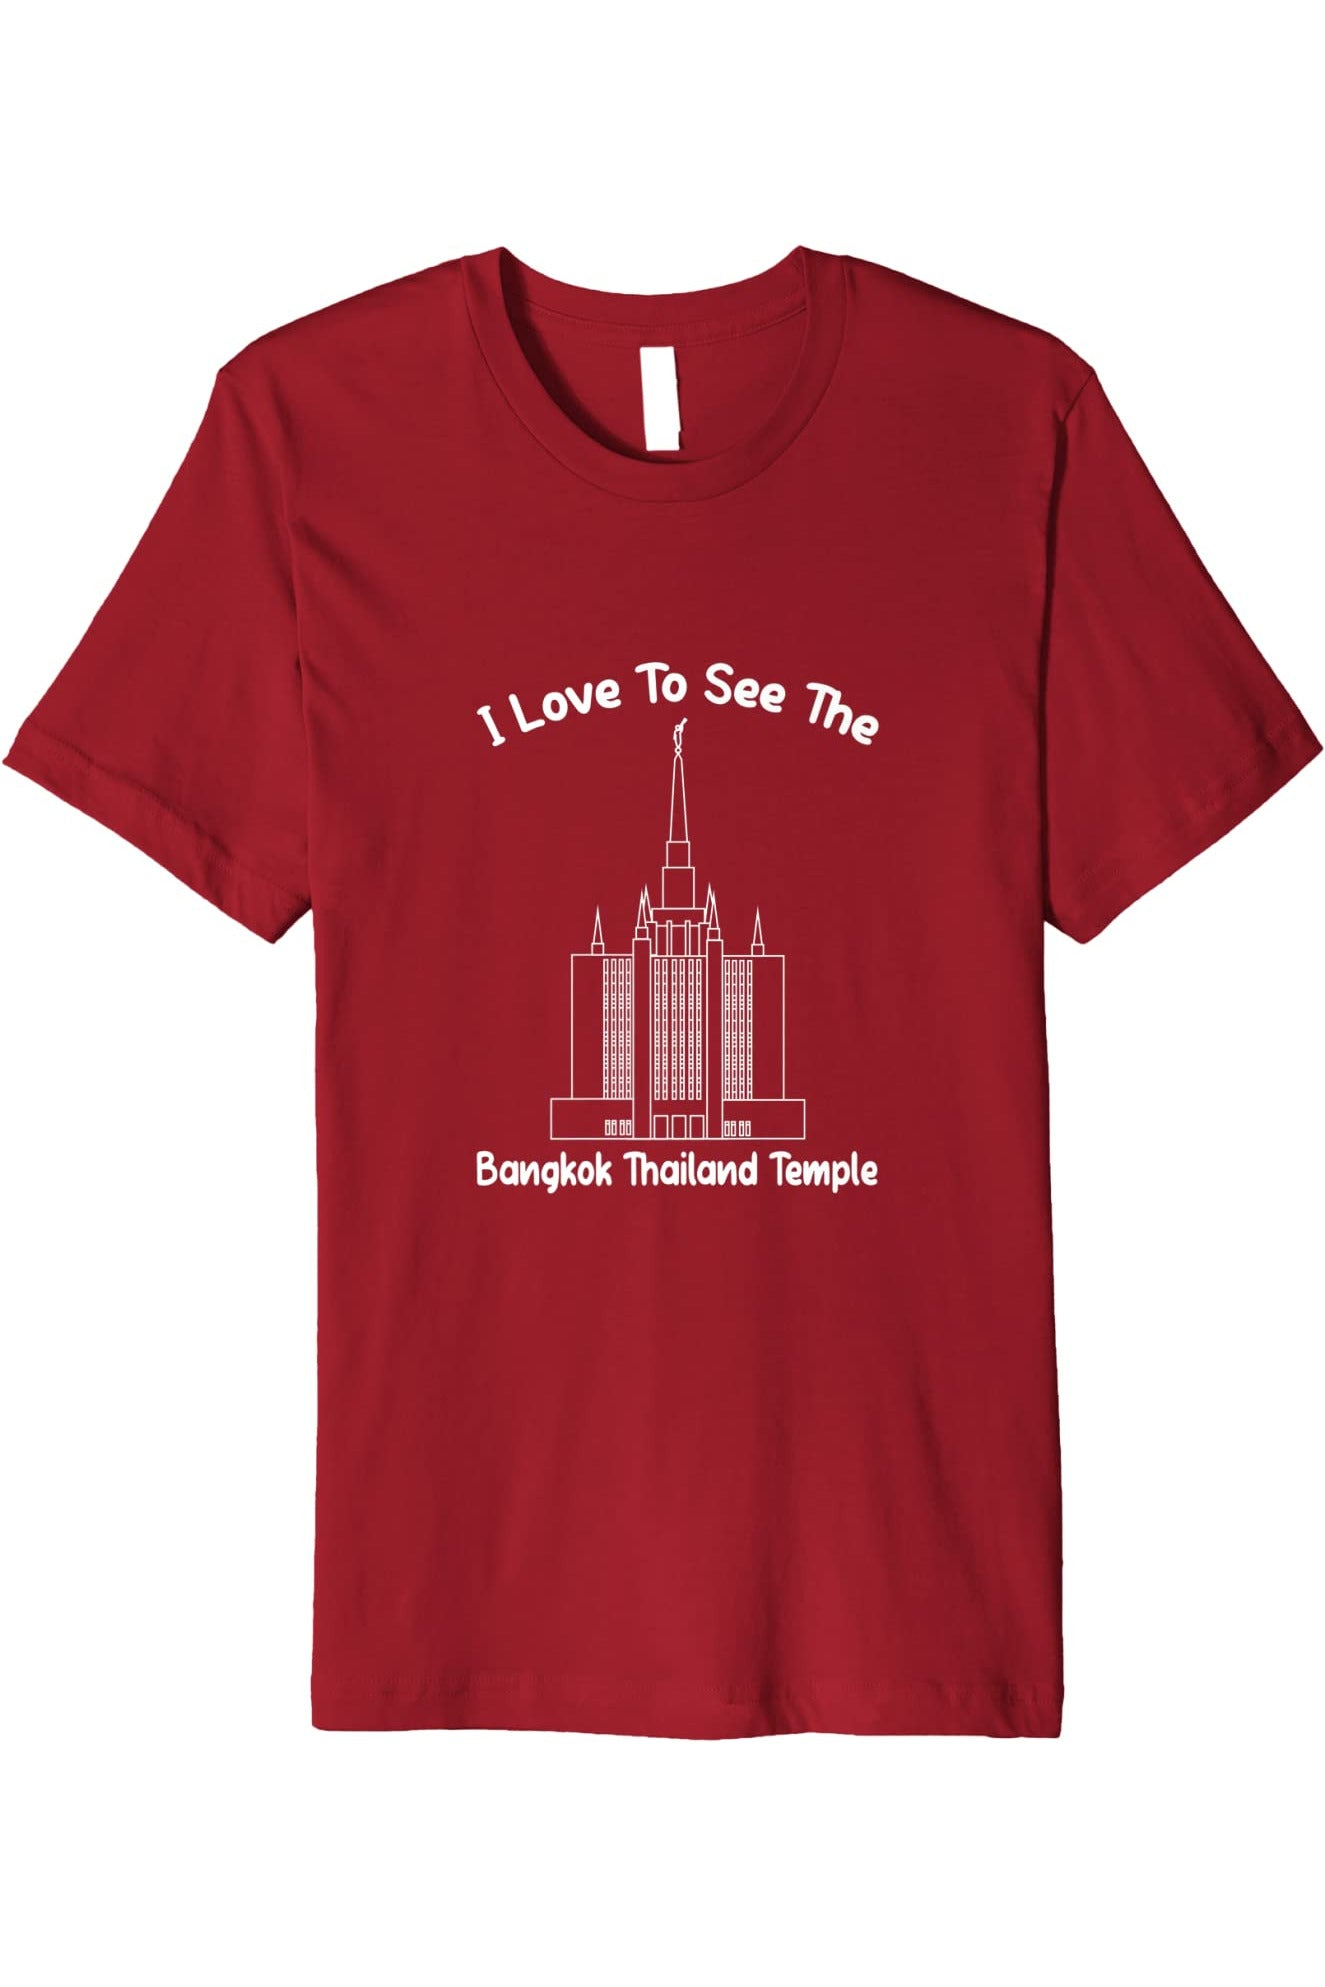 Bangkok Thailand Temple T-Shirt - Premium - Primary Style (English) US